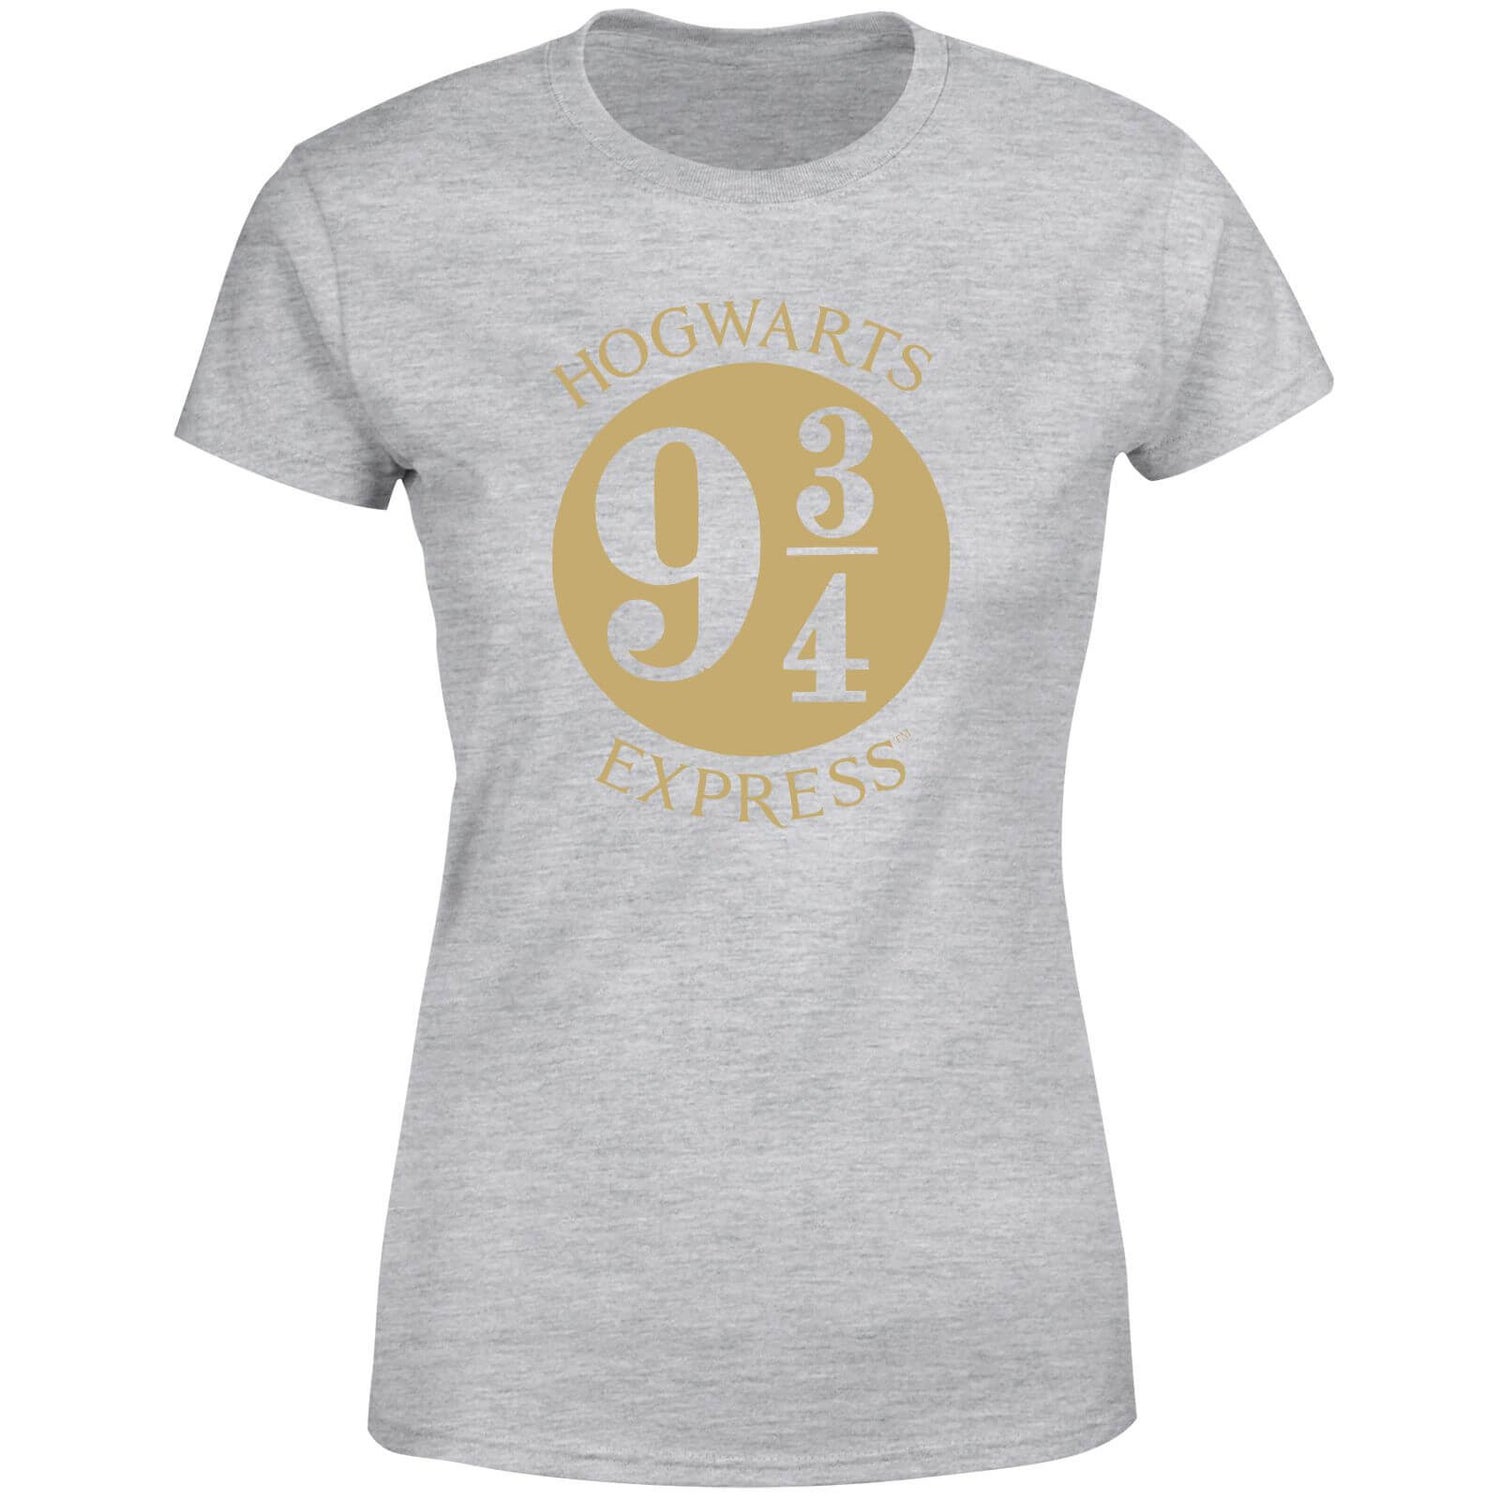 Harry Potter Platform Women's T-Shirt - Grey